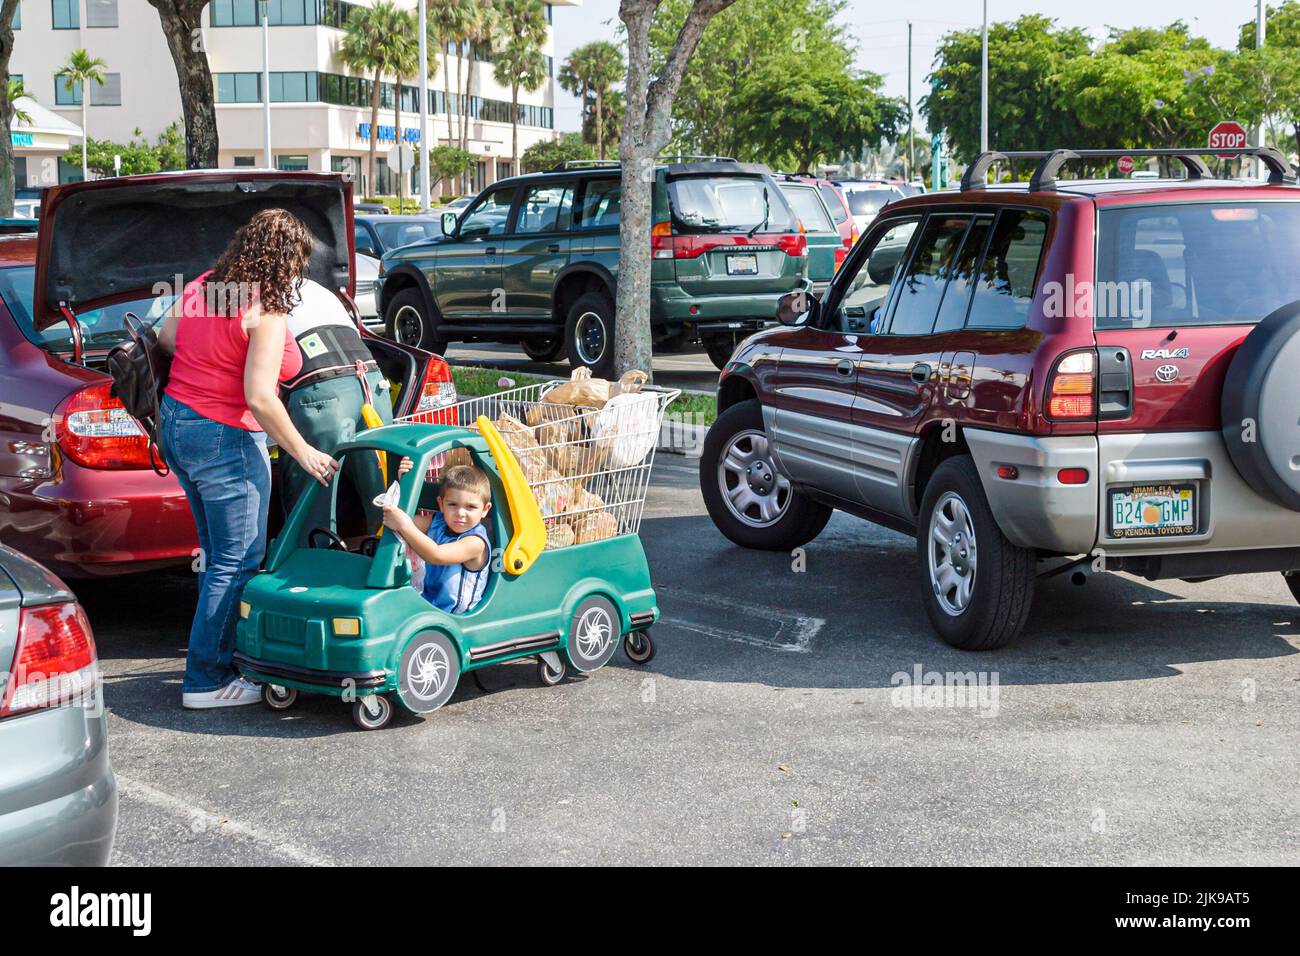 Miami Florida,shopping shopper center mall parking lot car park,Hispanic woman mother grabbing boy son cart as vehicle backs up preventing accident Stock Photo